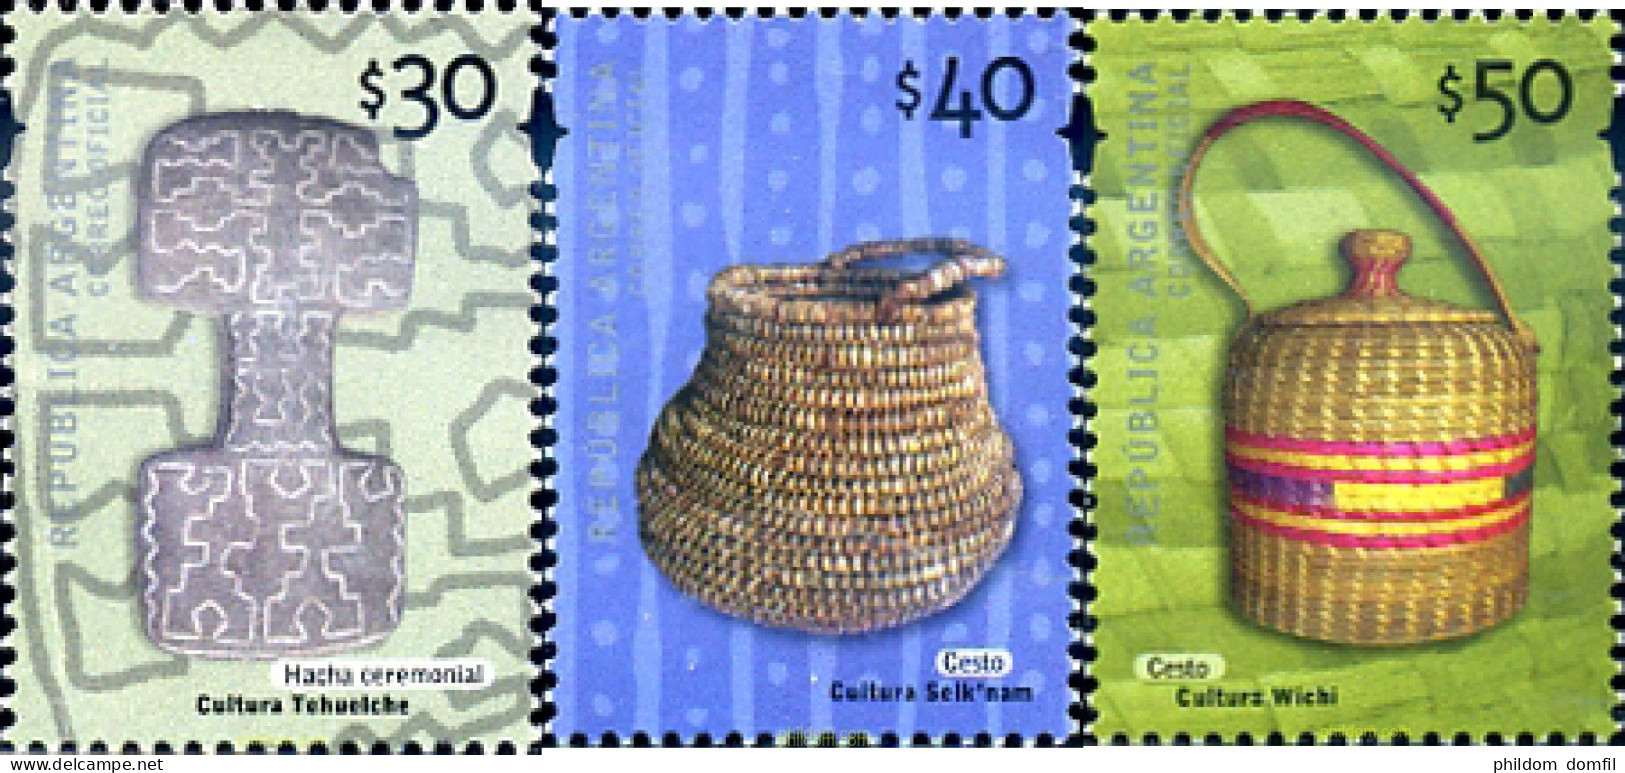 294930 MNH ARGENTINA 2012 ARTESANIA - Unused Stamps